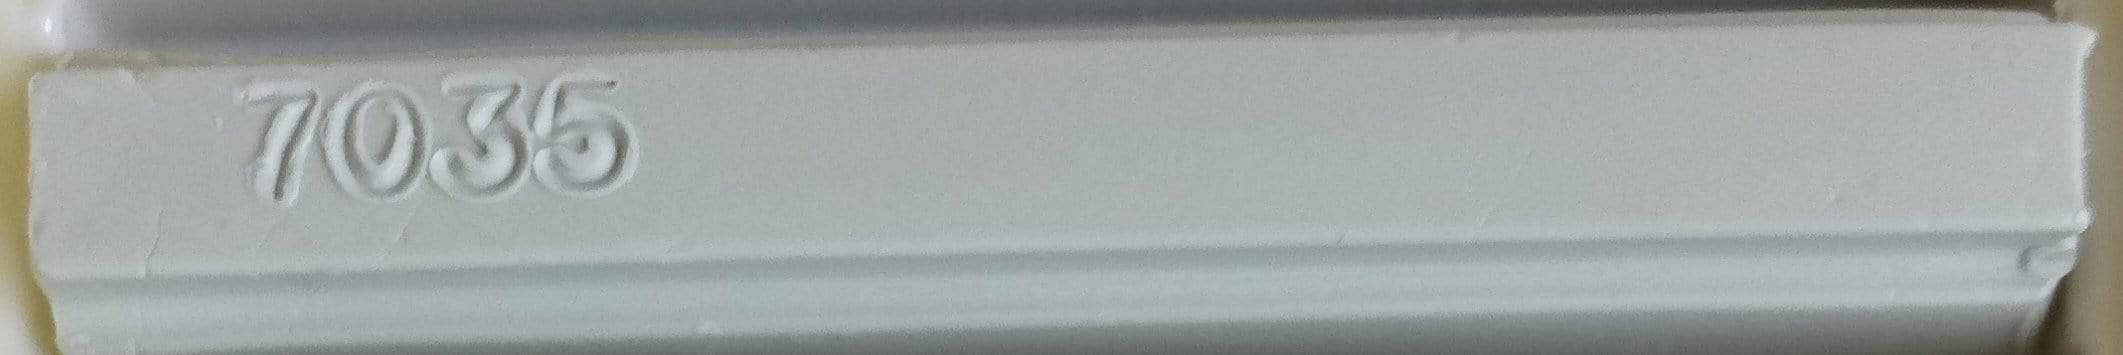 Konig 8cm Soft Wax or Hard Wax Filler Sticks RAL 7035 Light Grey